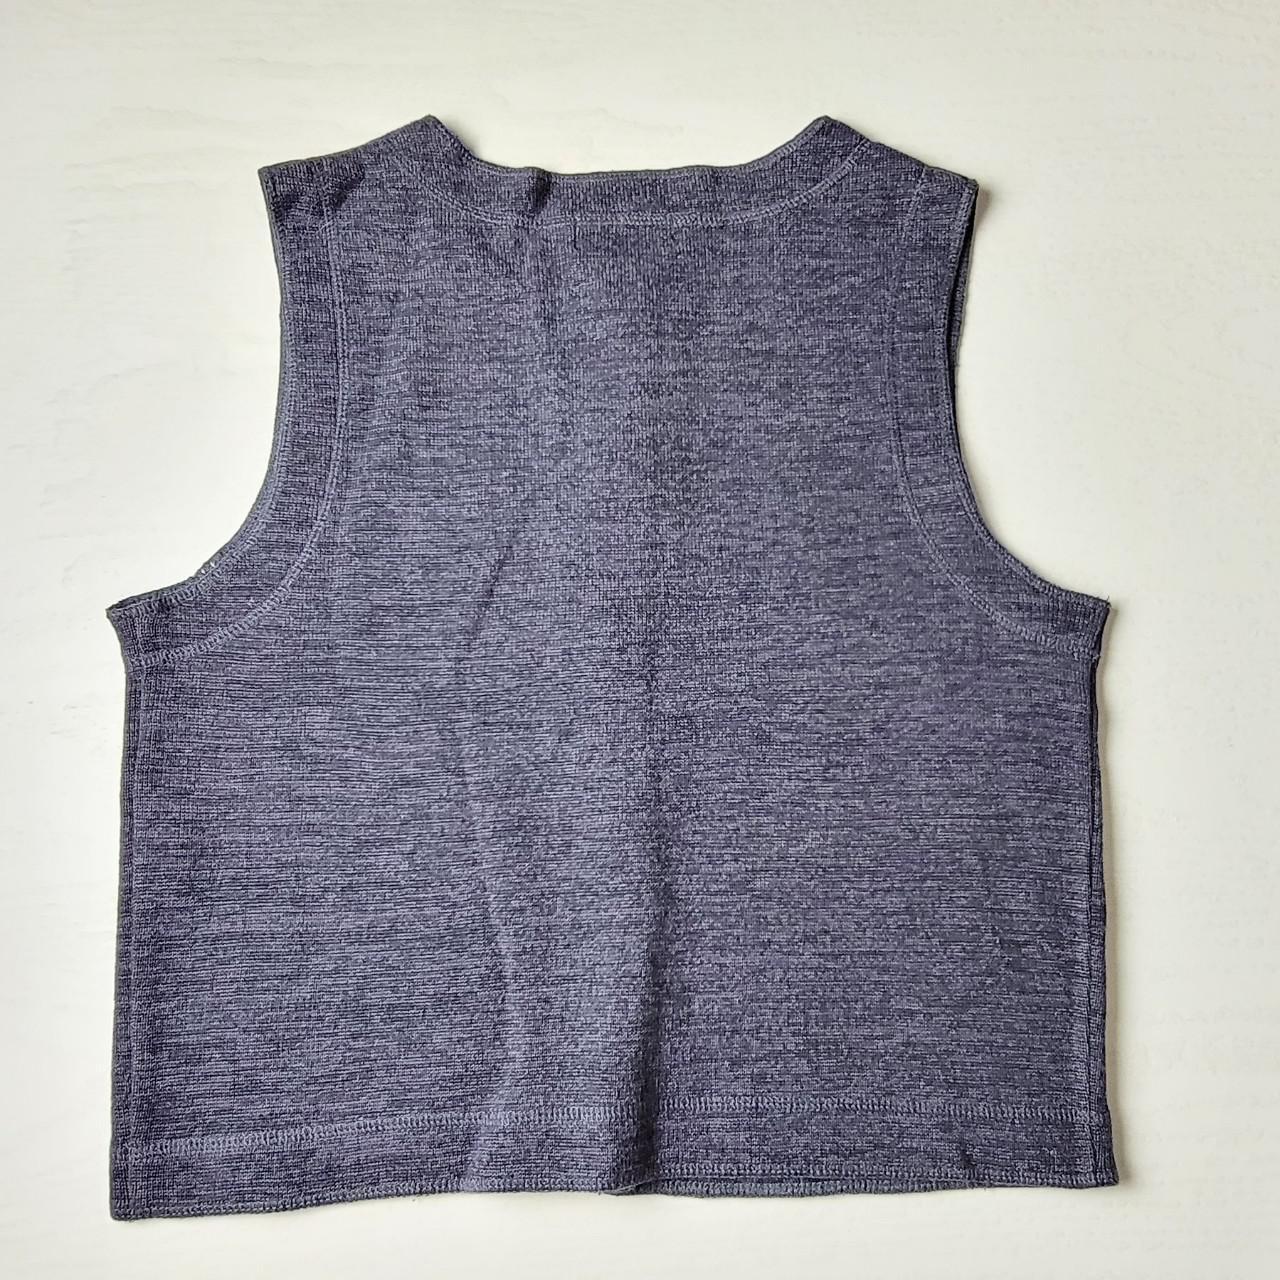 Product Image 2 - Dark Blue Grey Vest

Winter motif